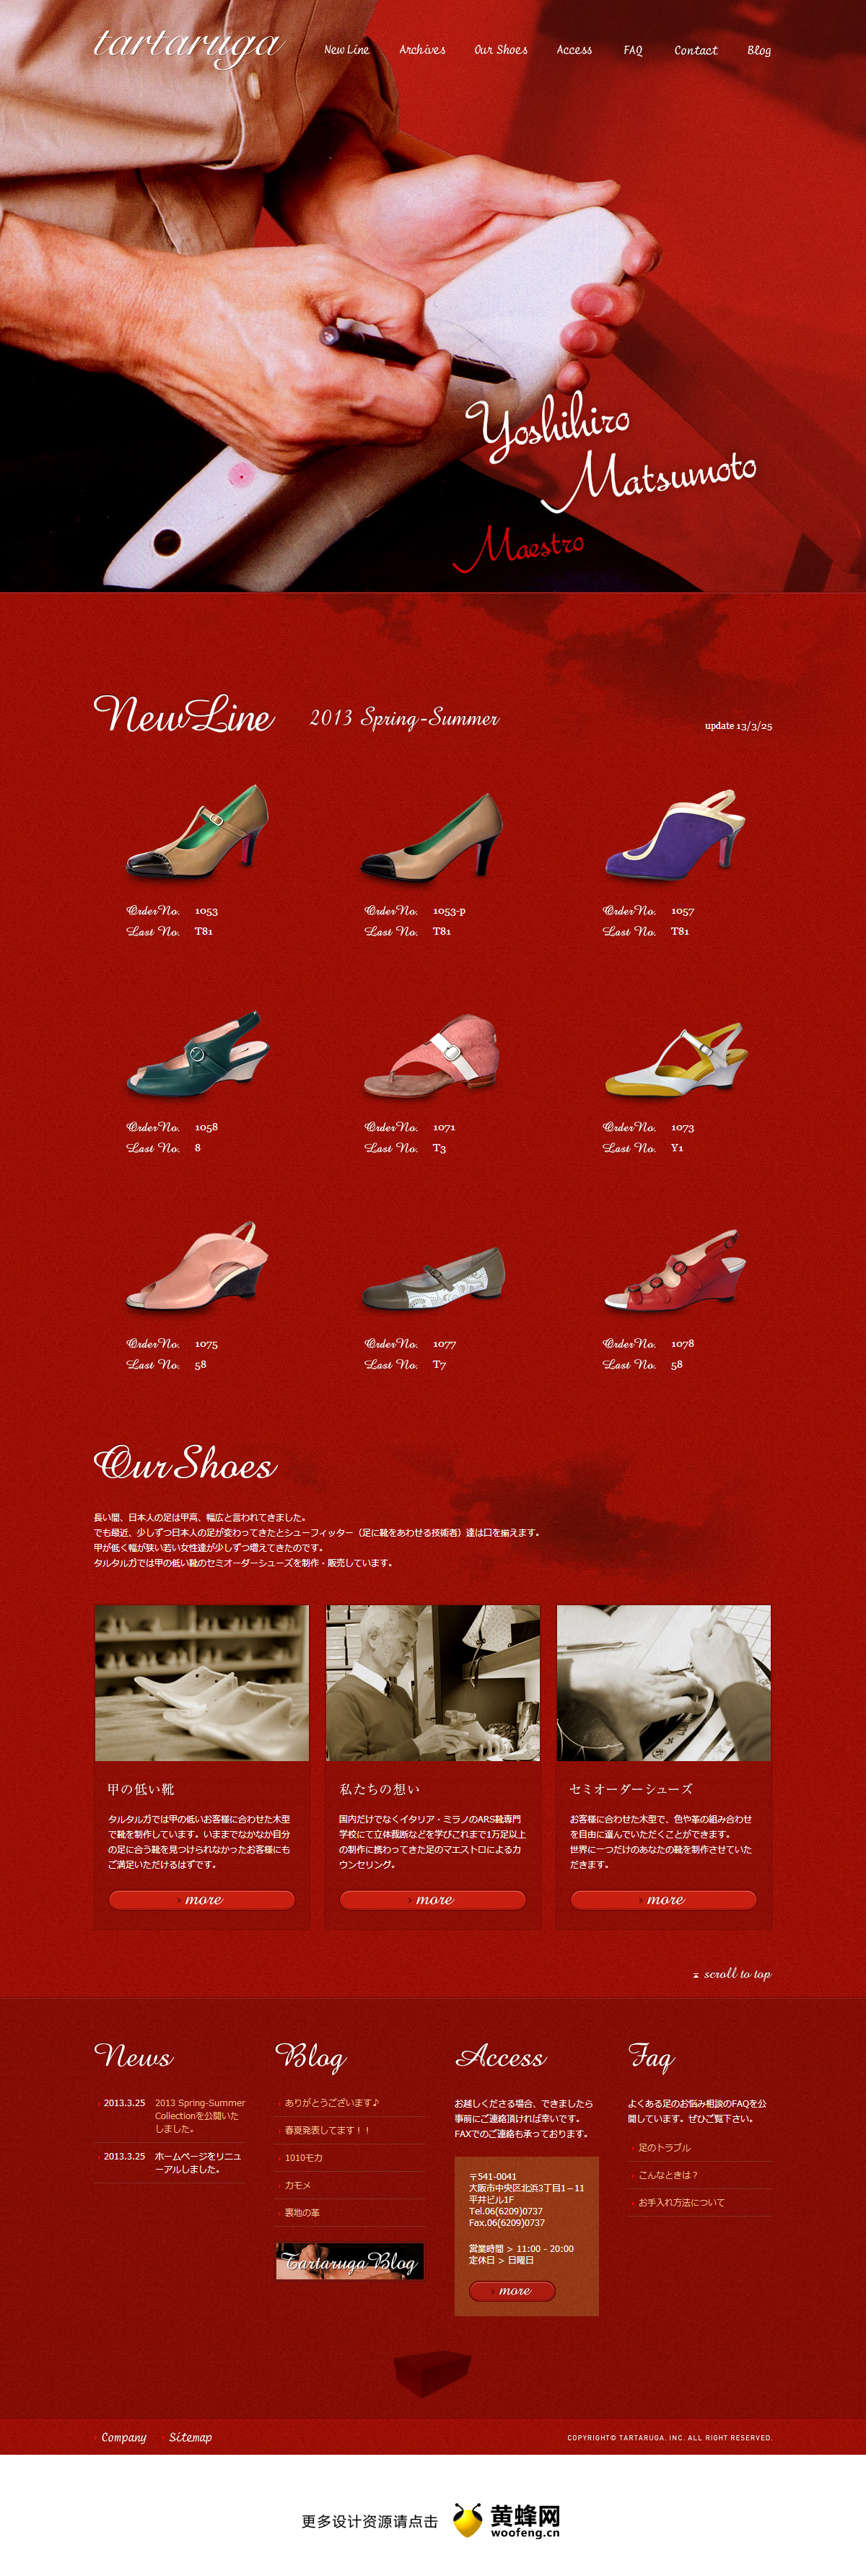 Tartaruga定制鞋的制造及销售，来源自黄蜂网https://woofeng.cn/web/